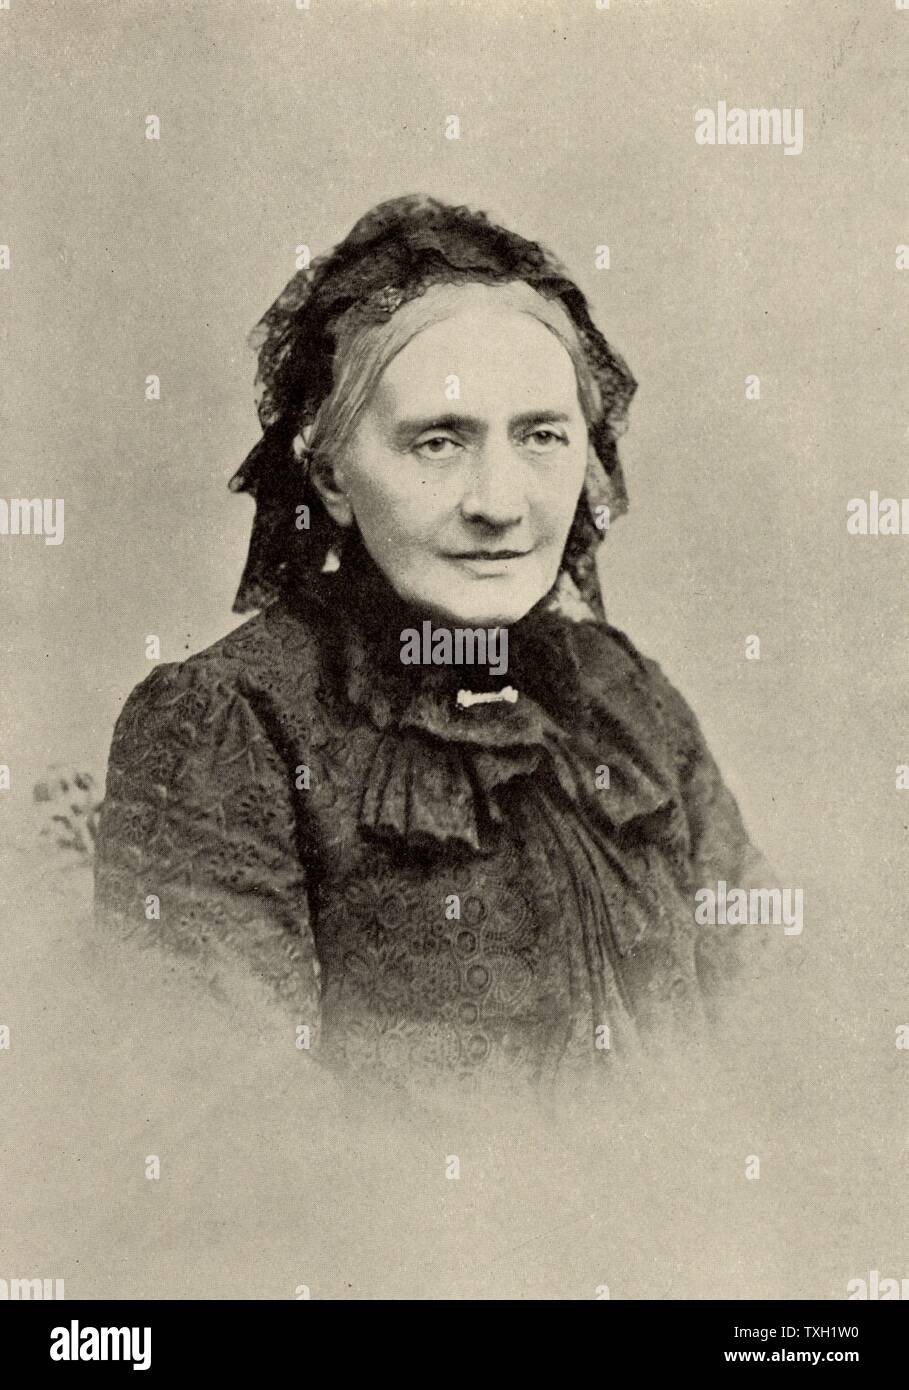 Clara Schumann (born Clara Wieck - 1819-1896) German pianist in old age. Widow of composer Robert Schumann. From a photograph. Halftone. Stock Photo